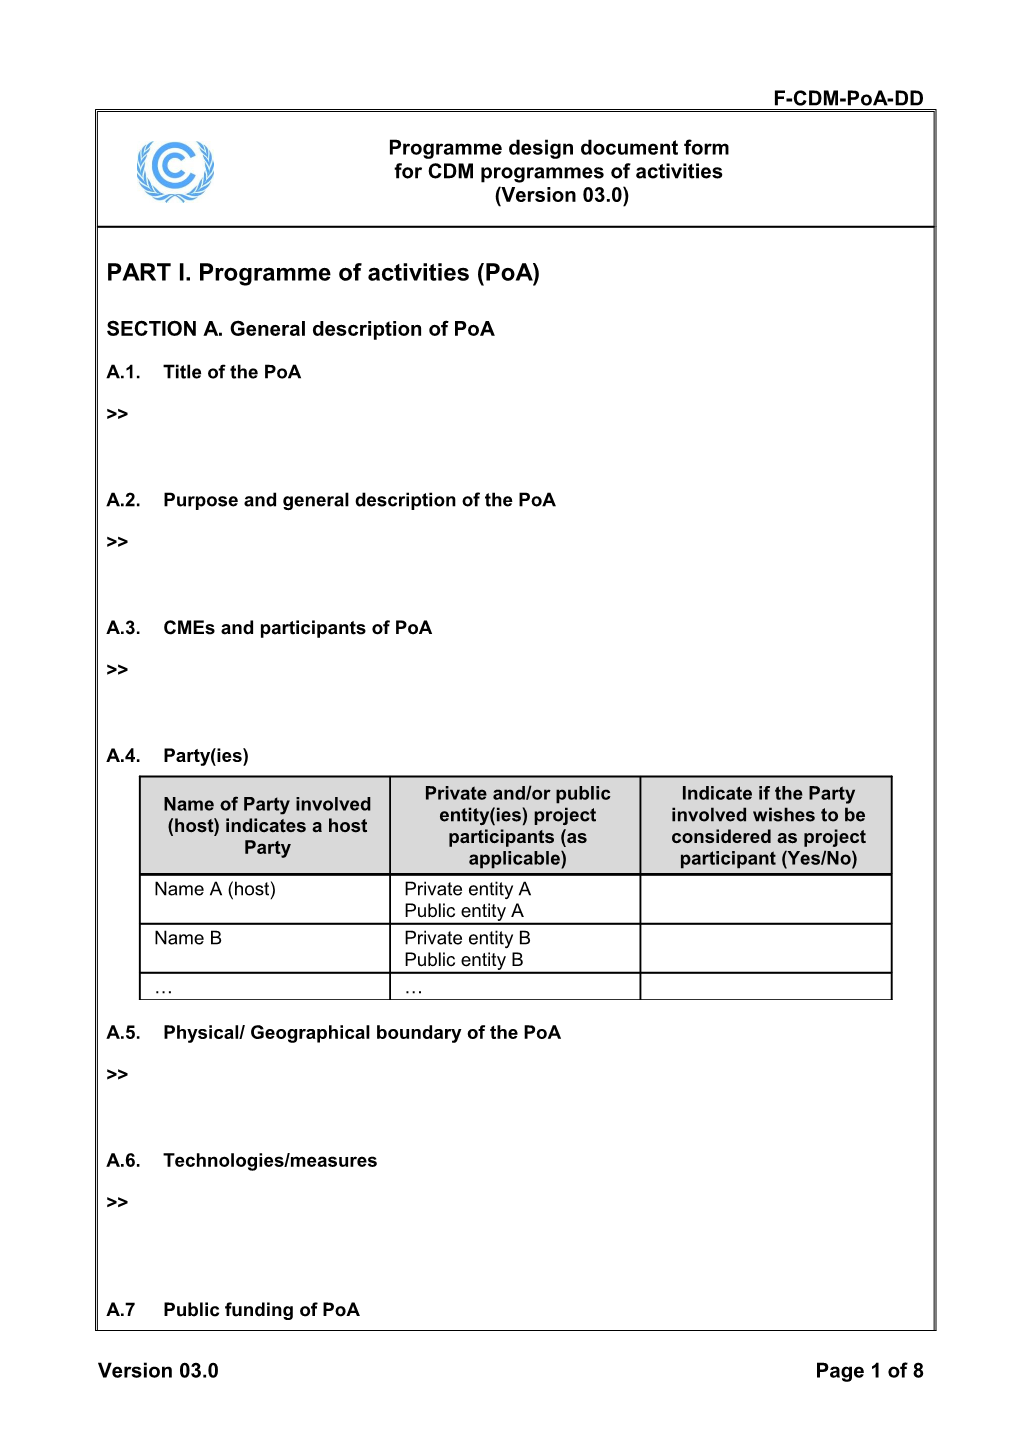 F-CDM-Poa-DD: Programme Design Document Form for CDM Programmes of Activities. Version 03.0